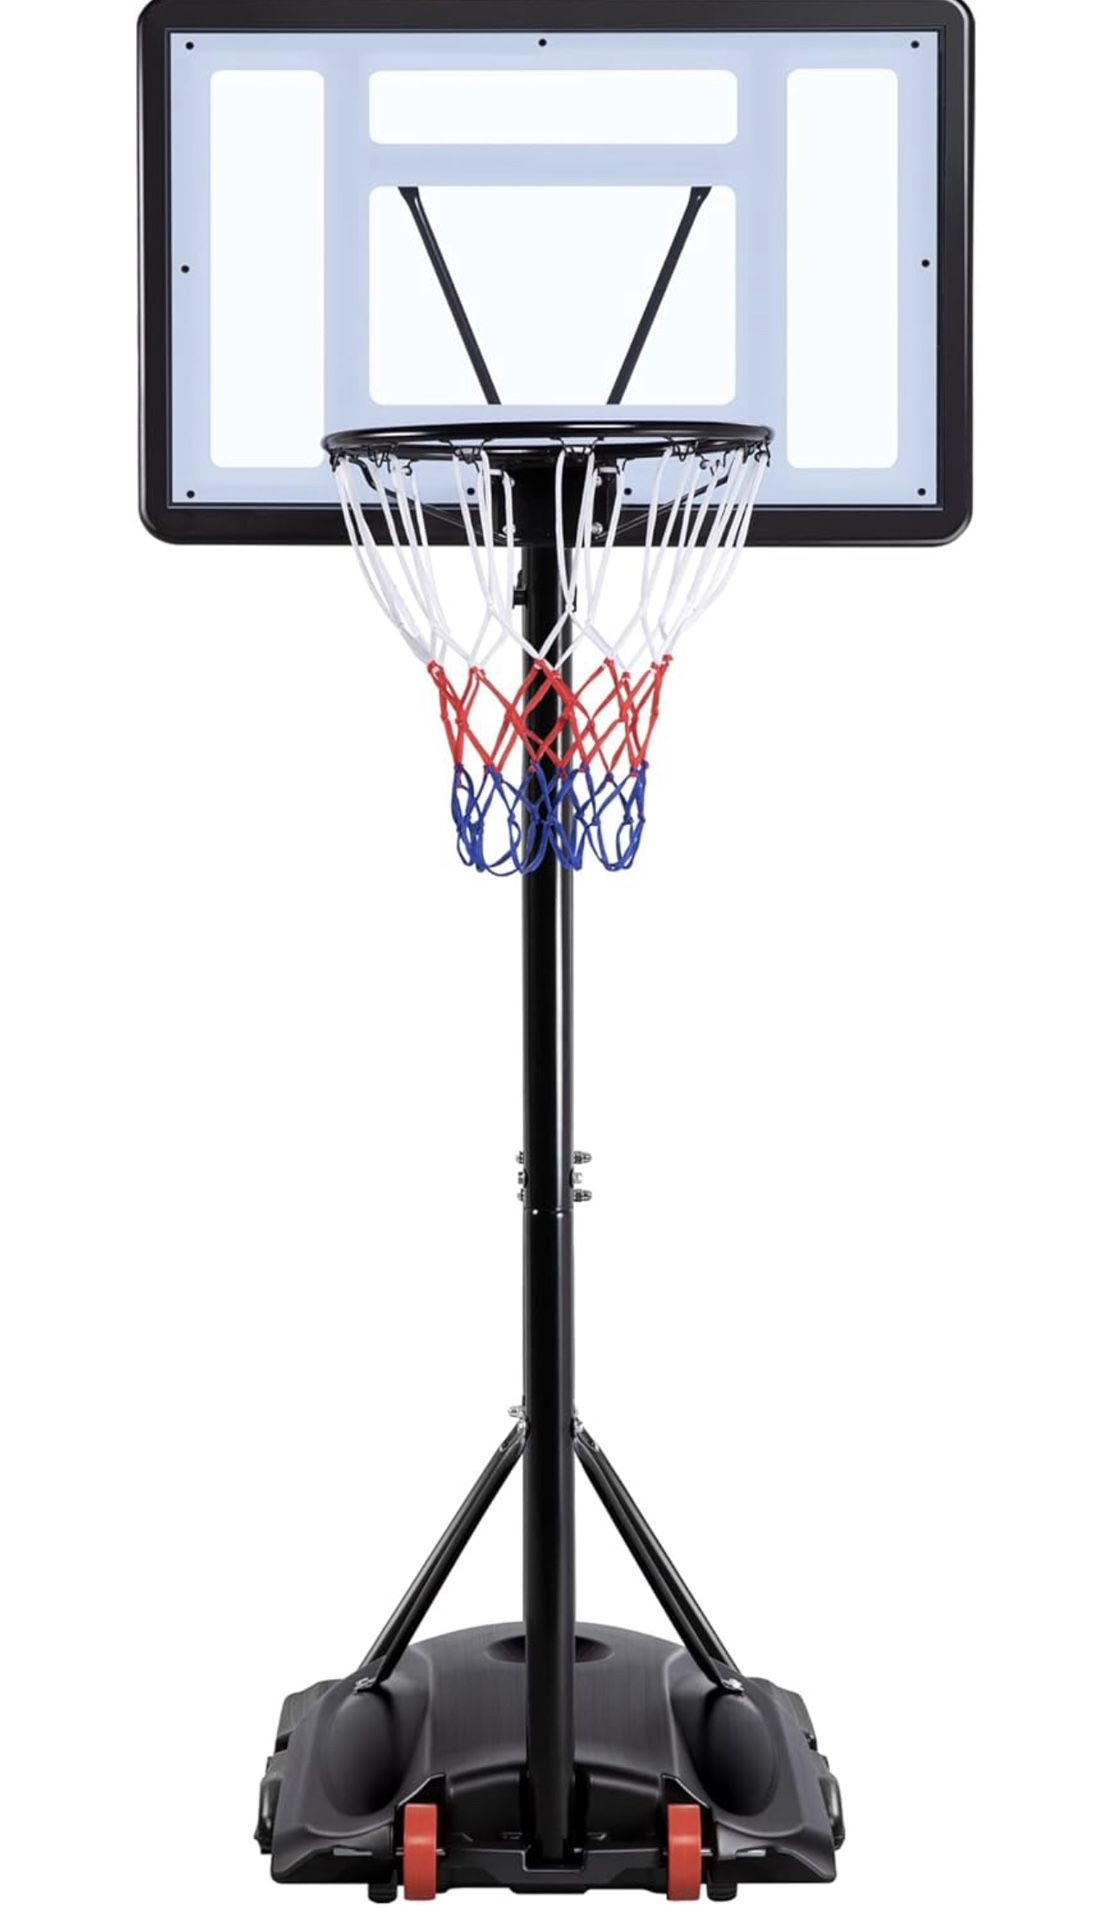 Portable Basketball Hoop Backboard System Removeable Adjustable Basketball Hoop & Goals Outdoor/Indoor Adjustable Height Basketball Set for Youth 5926